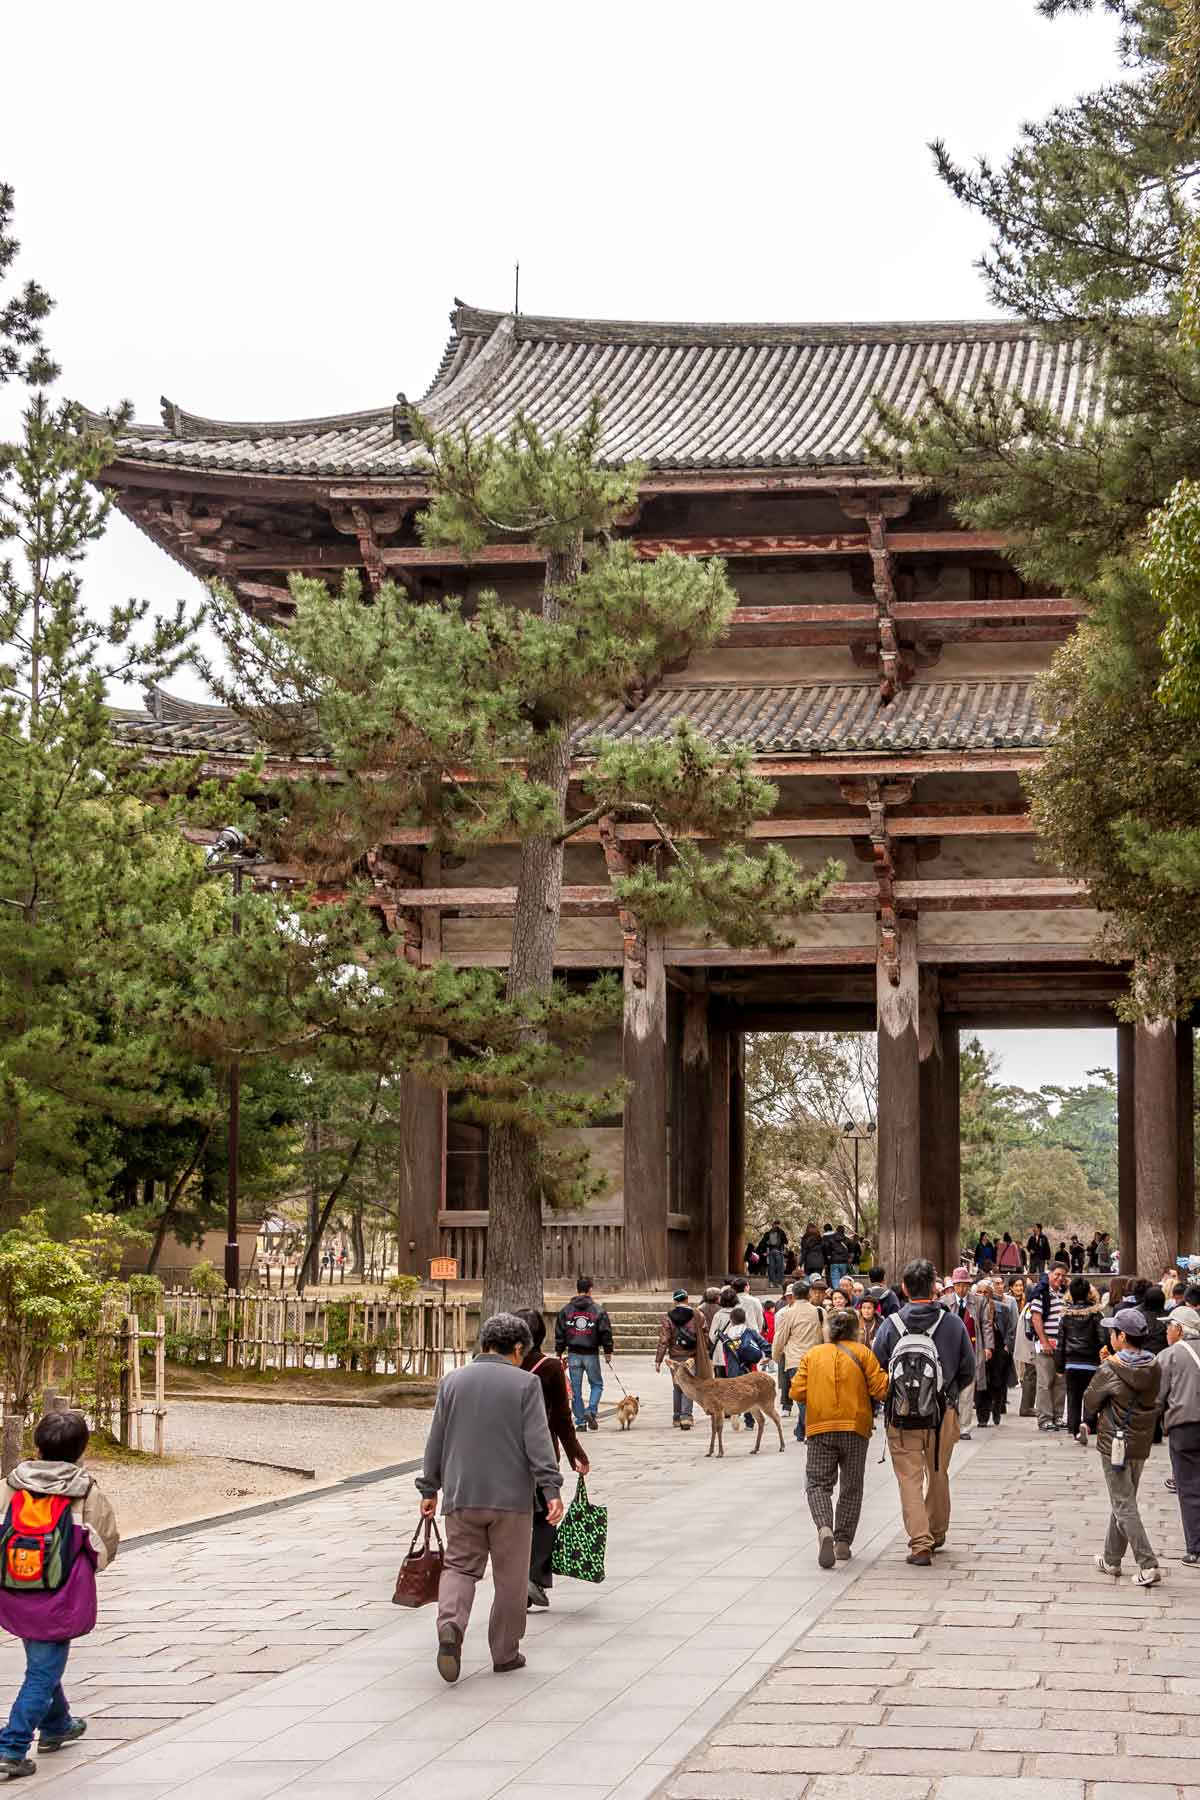 Things to do in Nara - feature photo of Nandai-mon gate at Todaiji